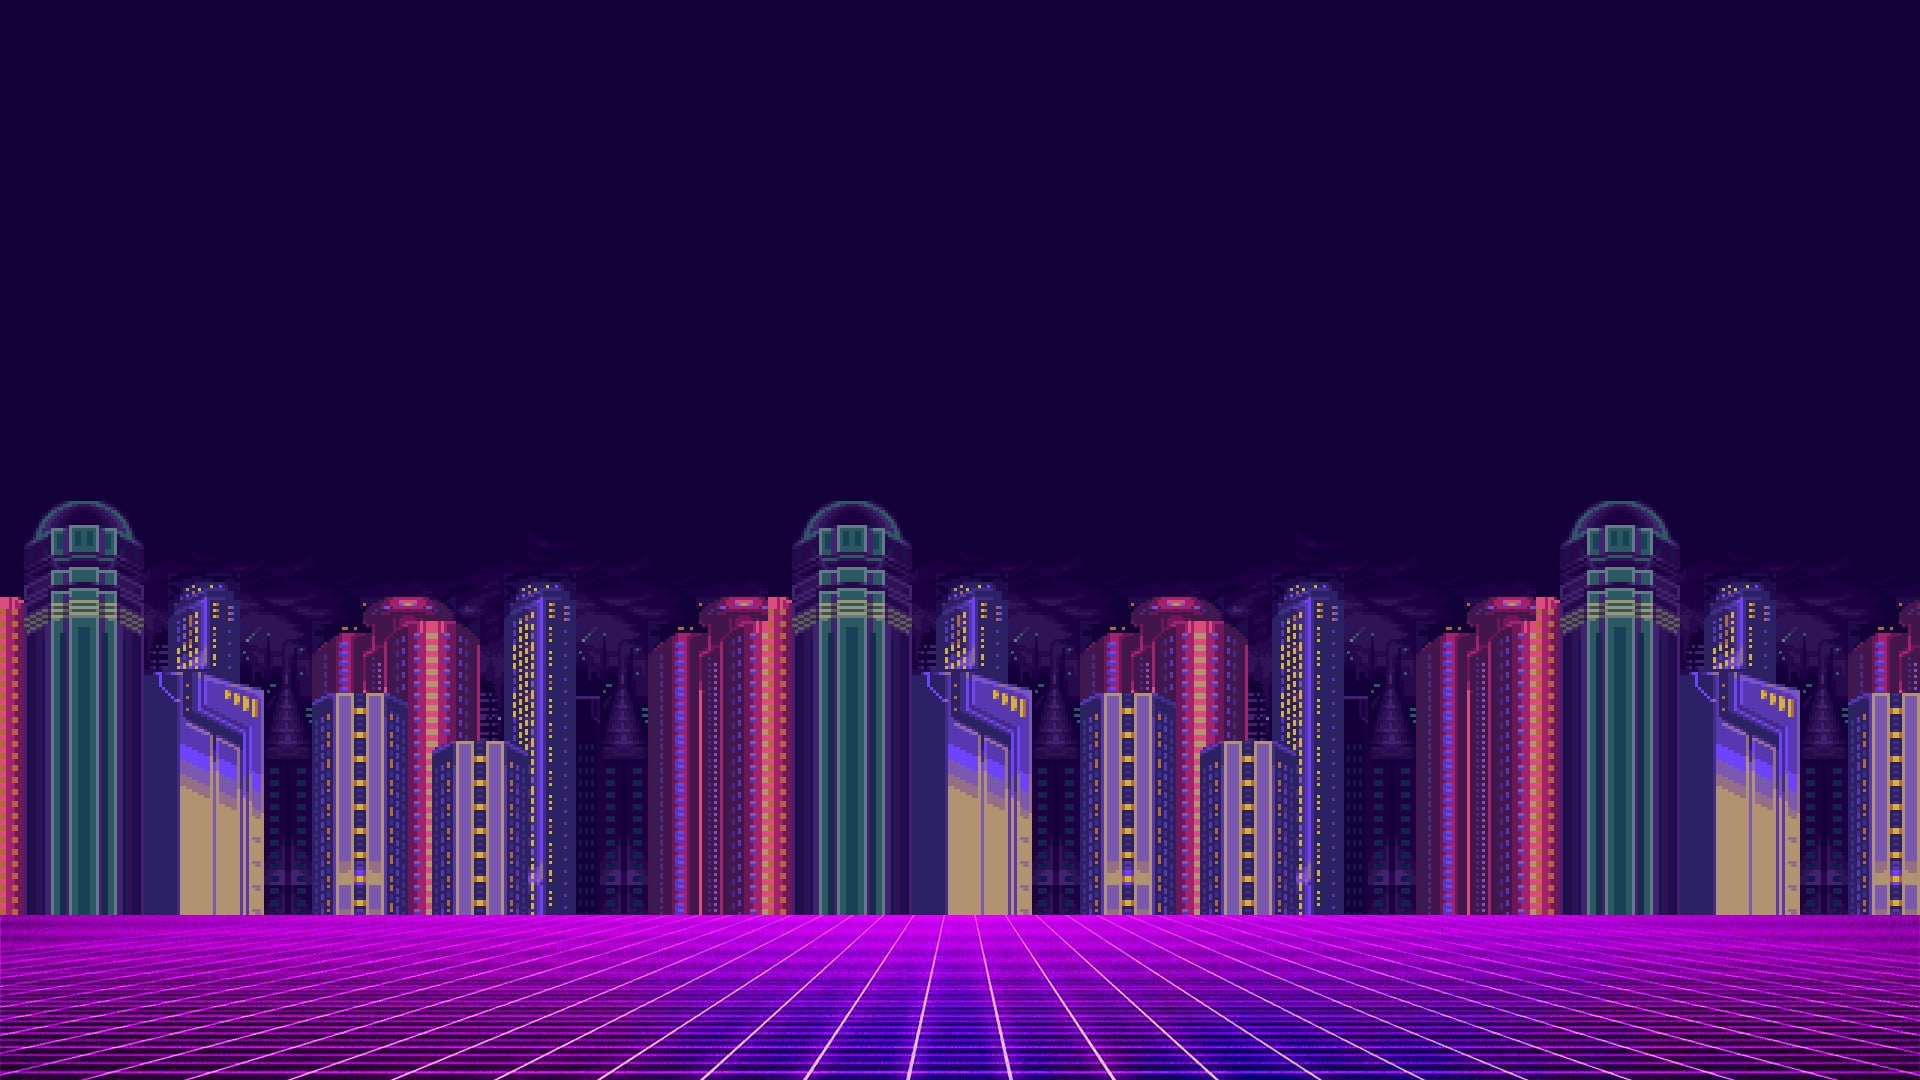 Synthwave 8-bit Pixel Cityscape